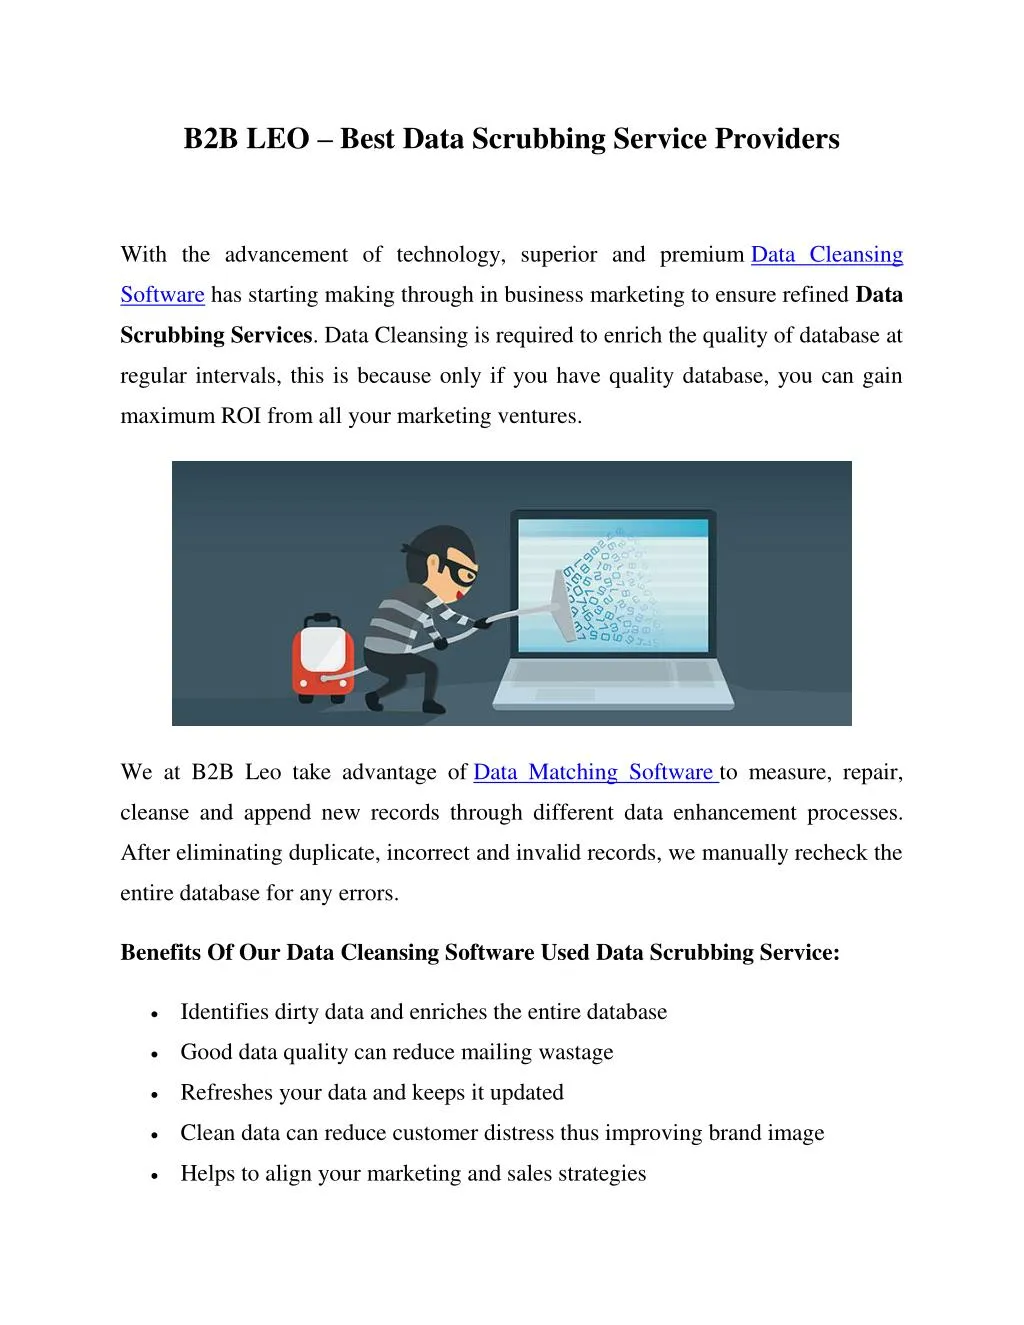 b2b leo best data scrubbing service providers